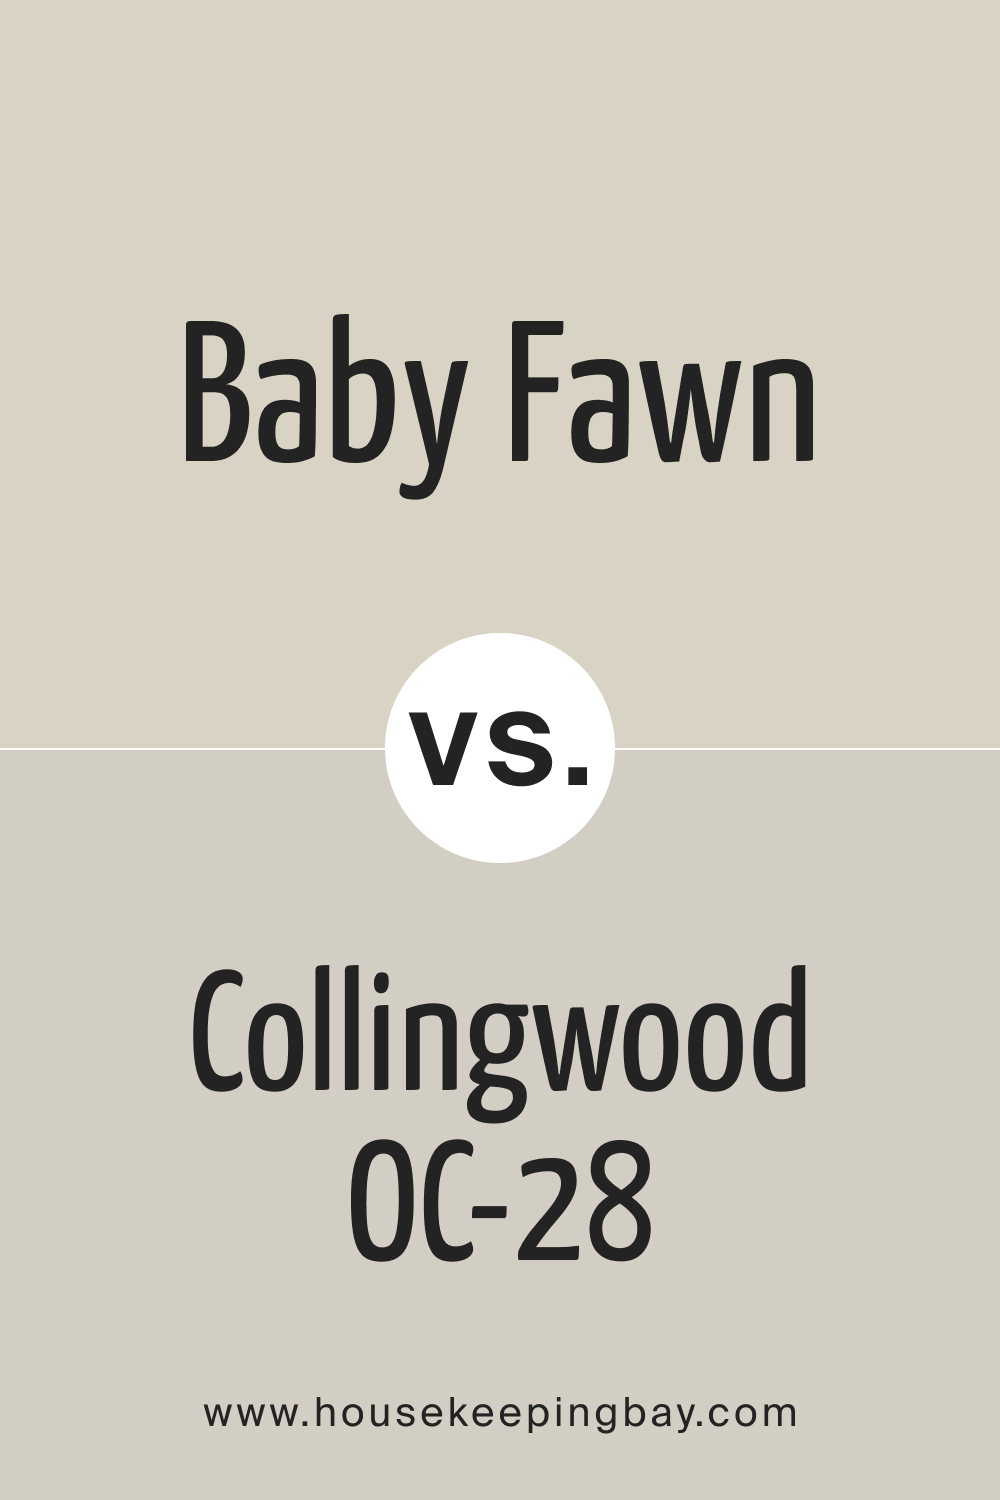 Baby Fawn vs Collingwood OC 28